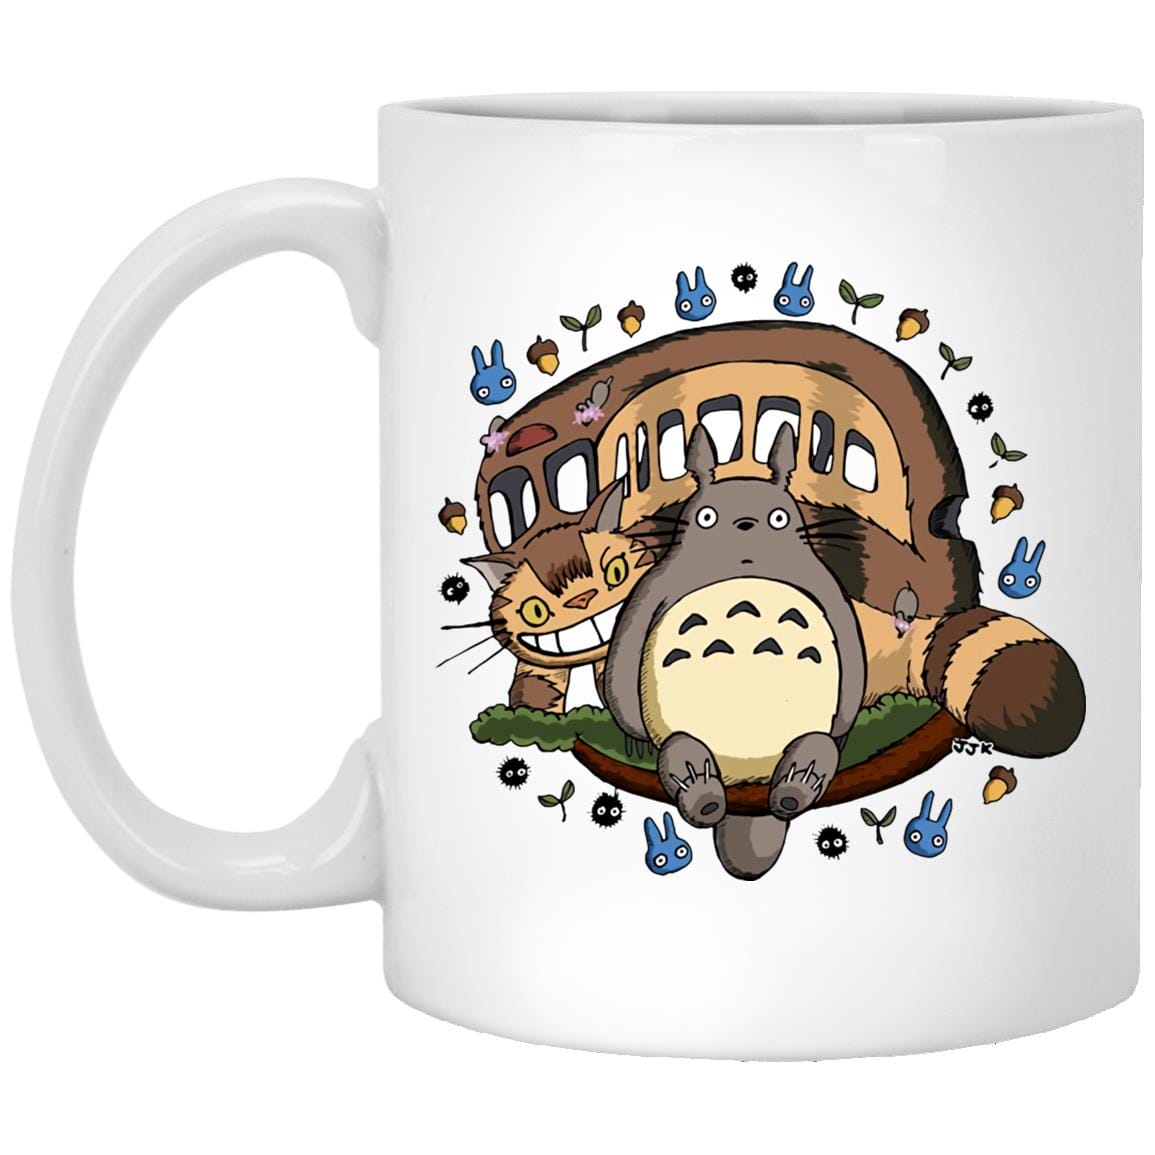 Totoro and the Catbus Mug